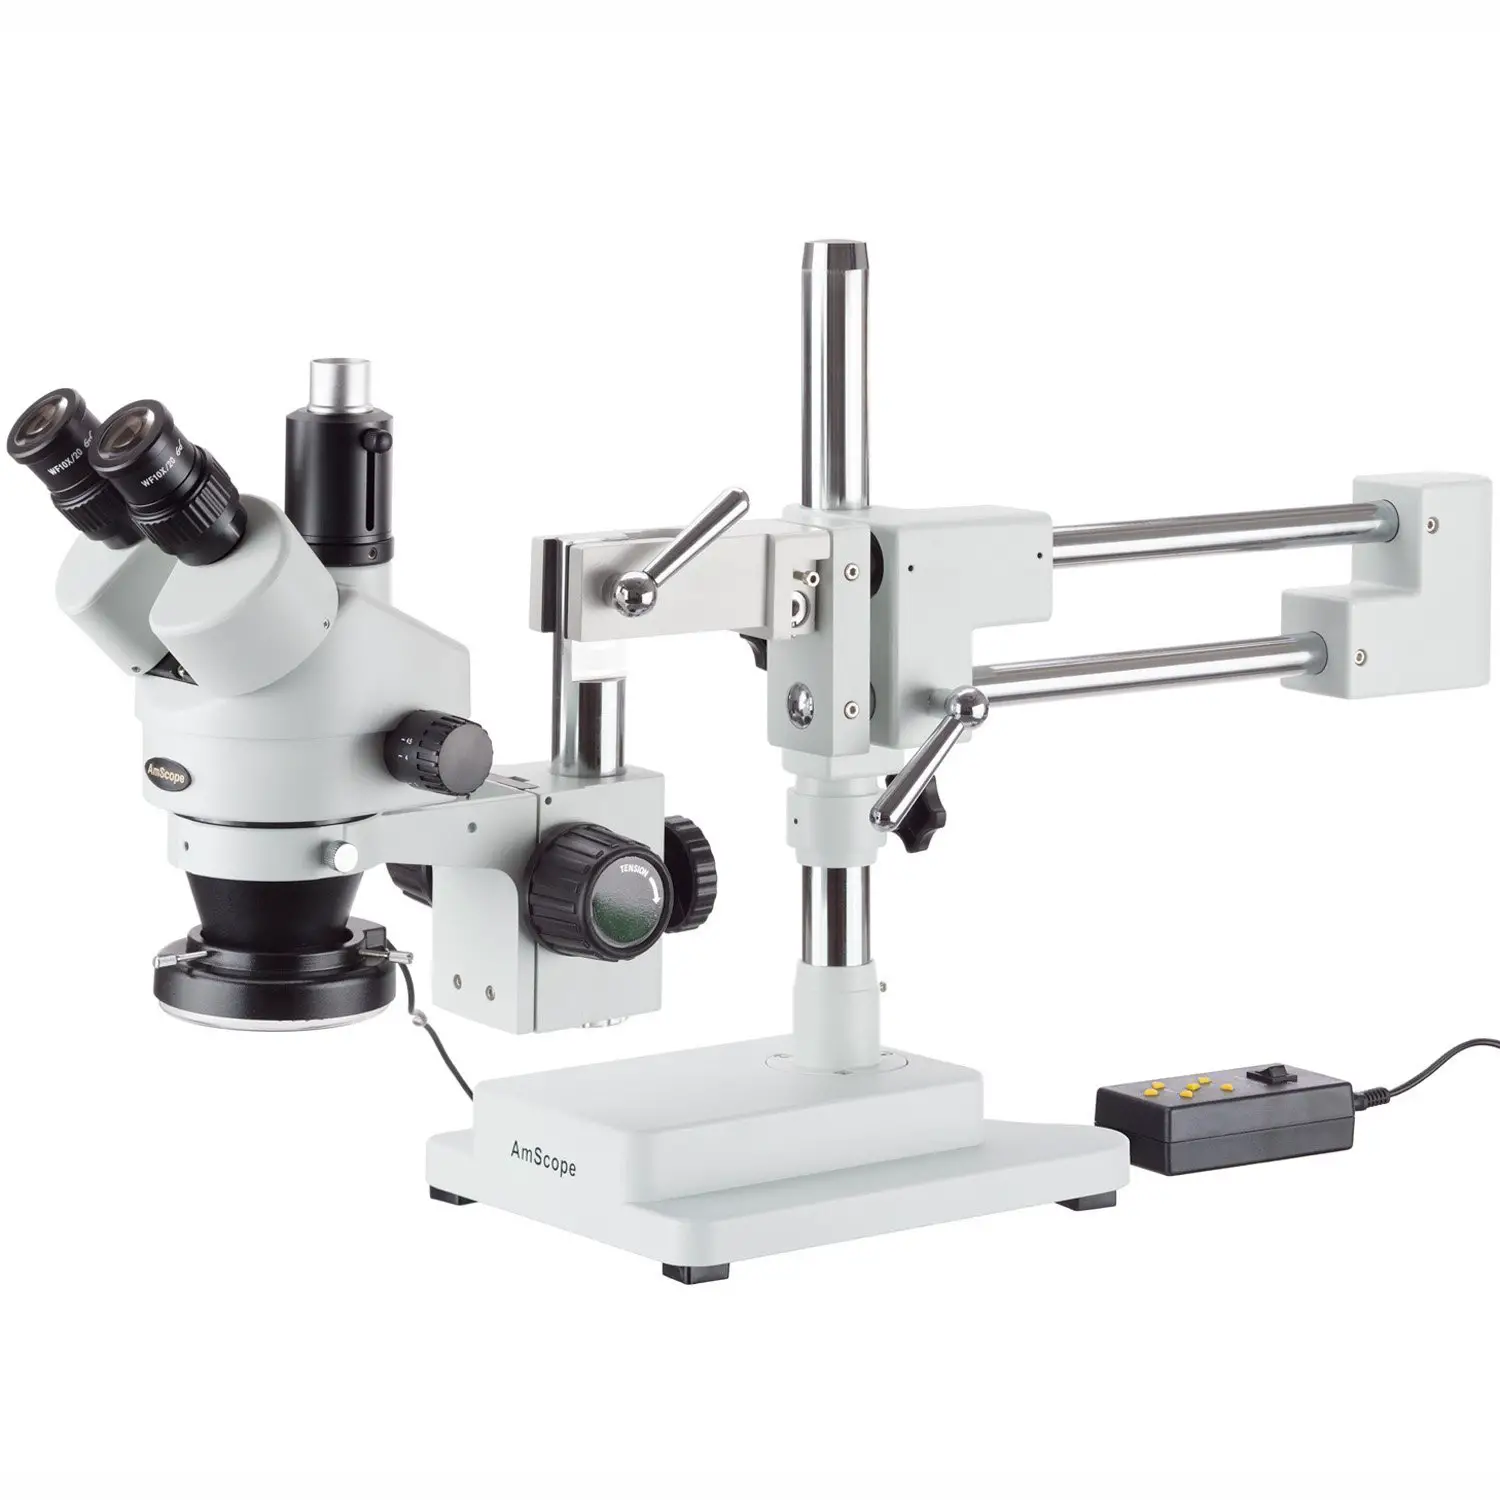 AmScope SM-4TZ-144A trinocular stereo microscope